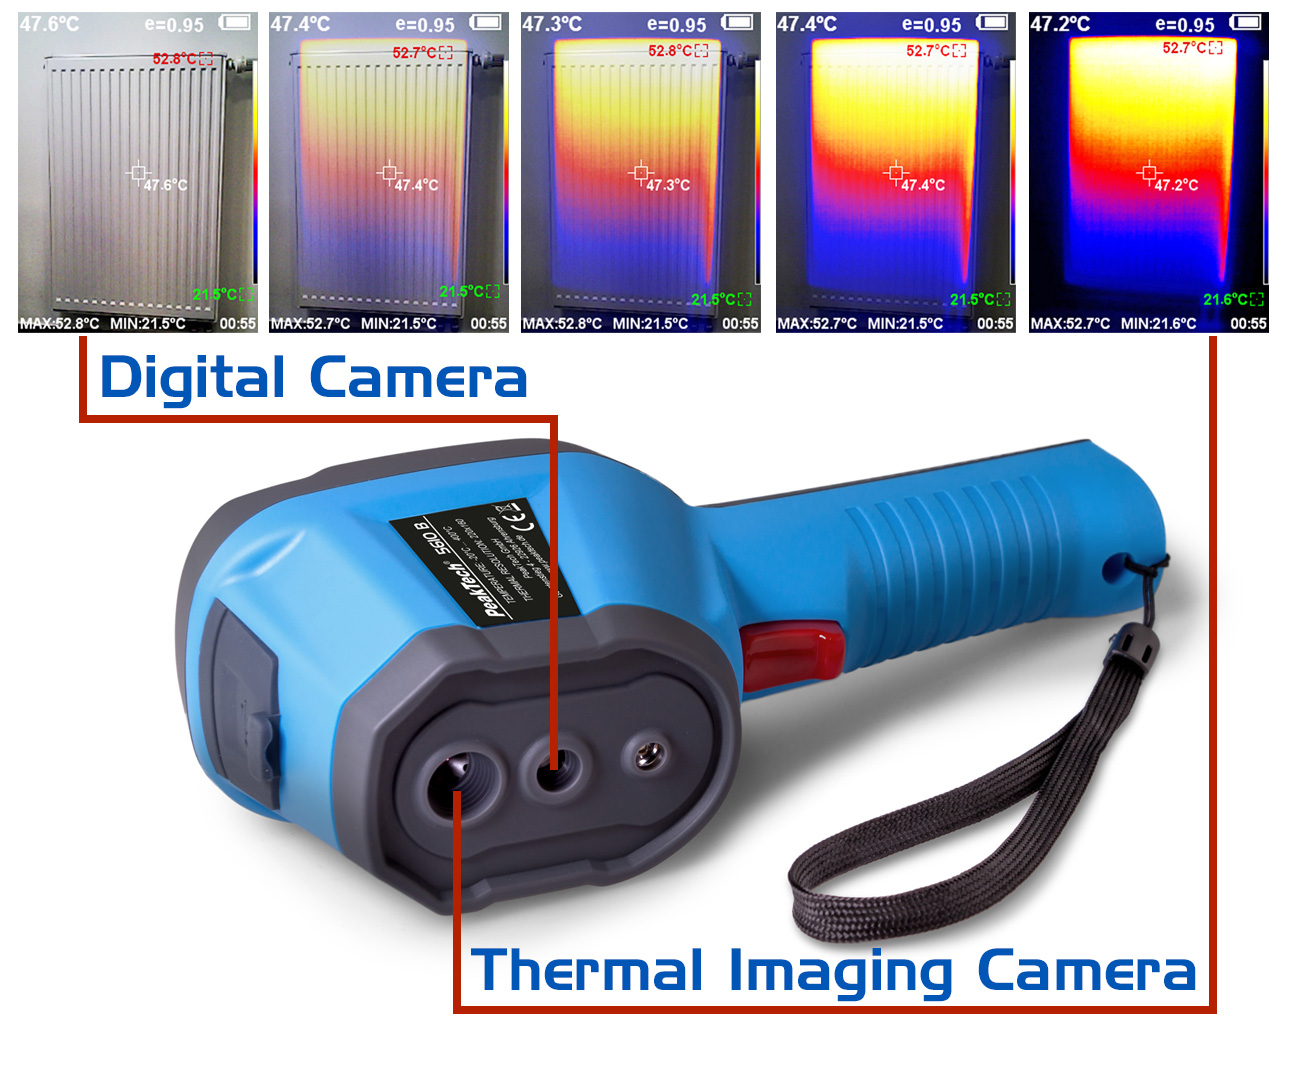 «PeakTech® P 5610 B» Thermal Imaging Camera 220x160px. -20°C ... +400°C